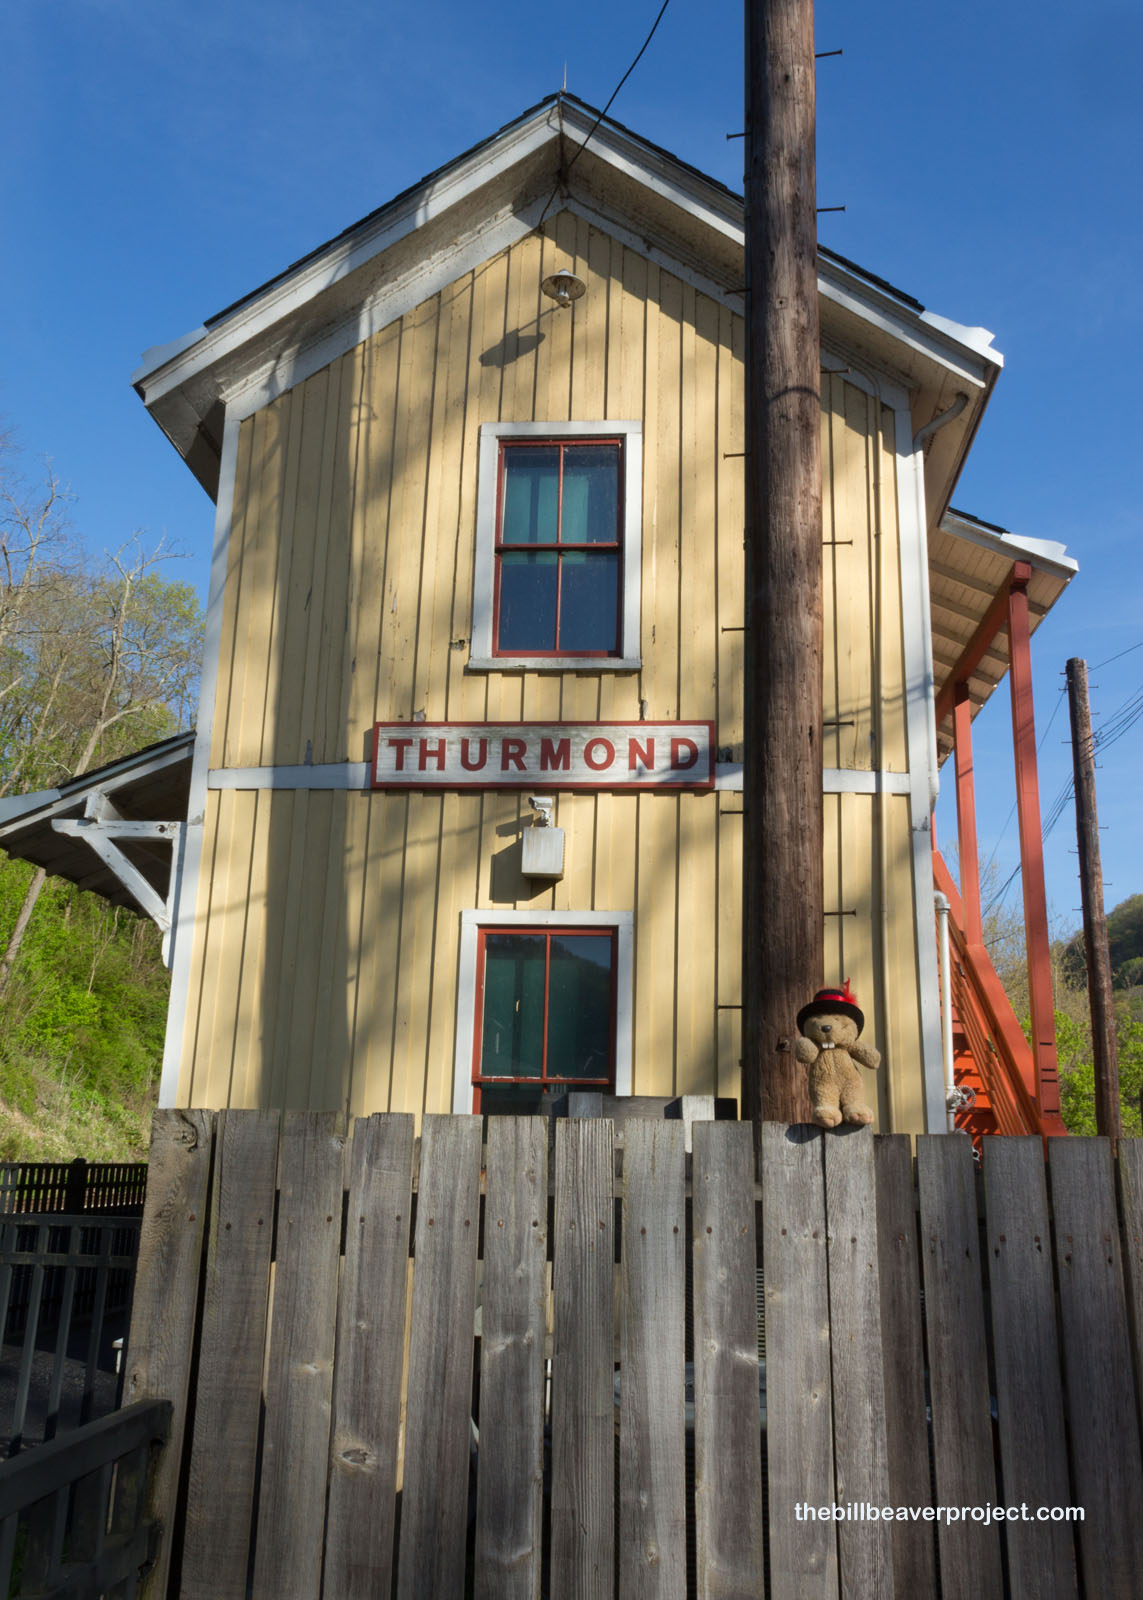 The historic coal town of Thurmond!